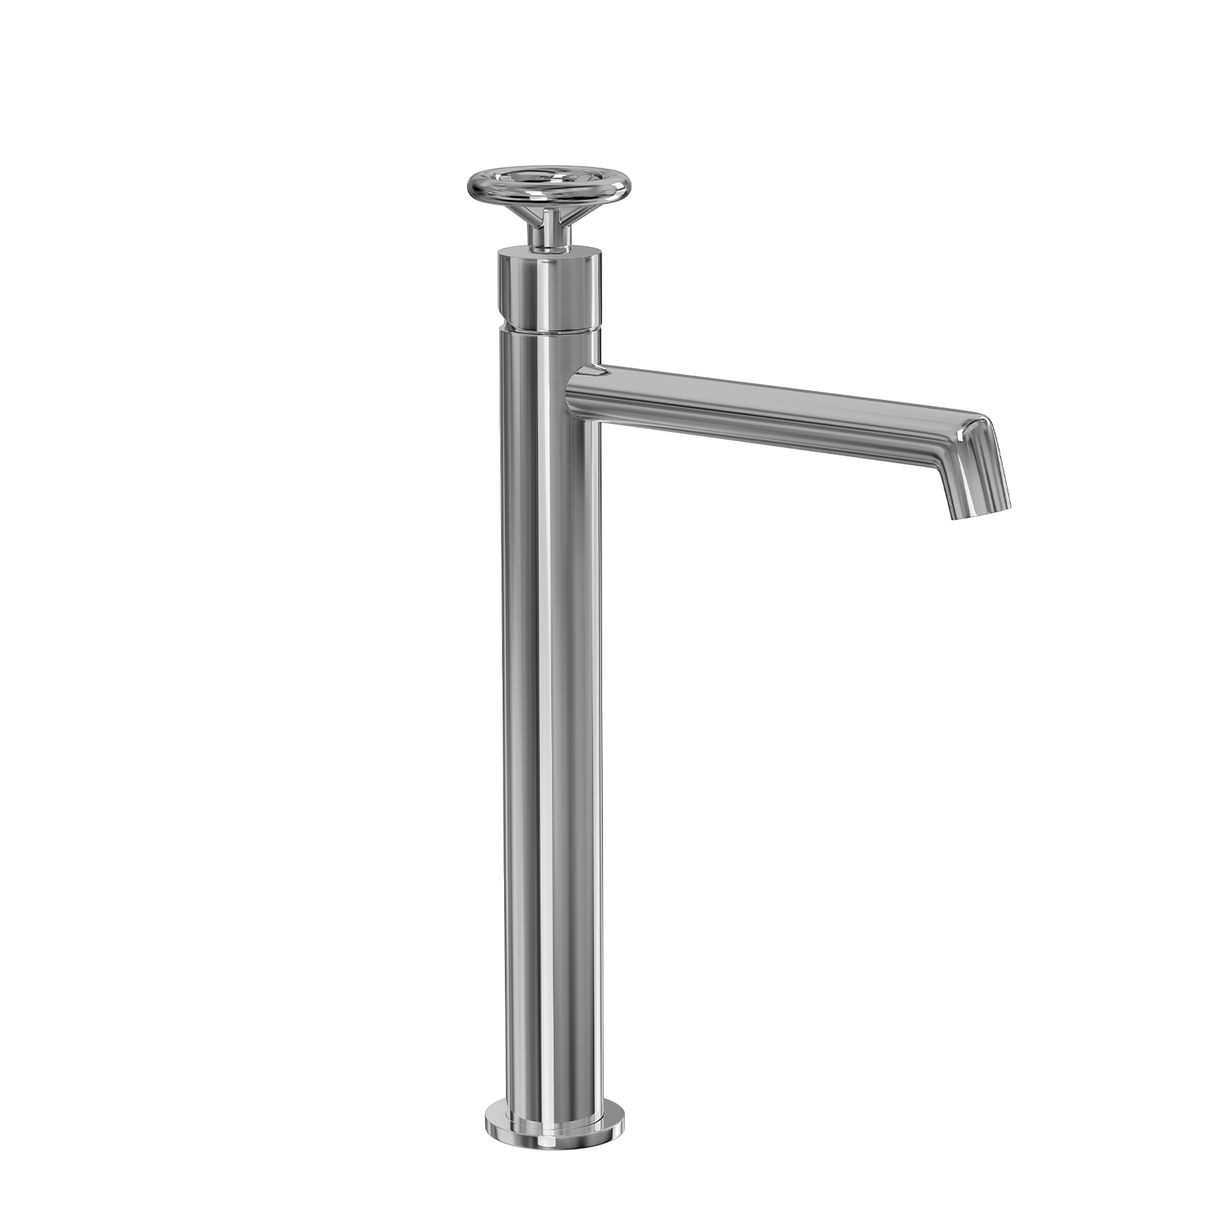 DAX Brass Single Handle Vessel Bathroom Basin Faucet, Chrome DAX-8010044-CR